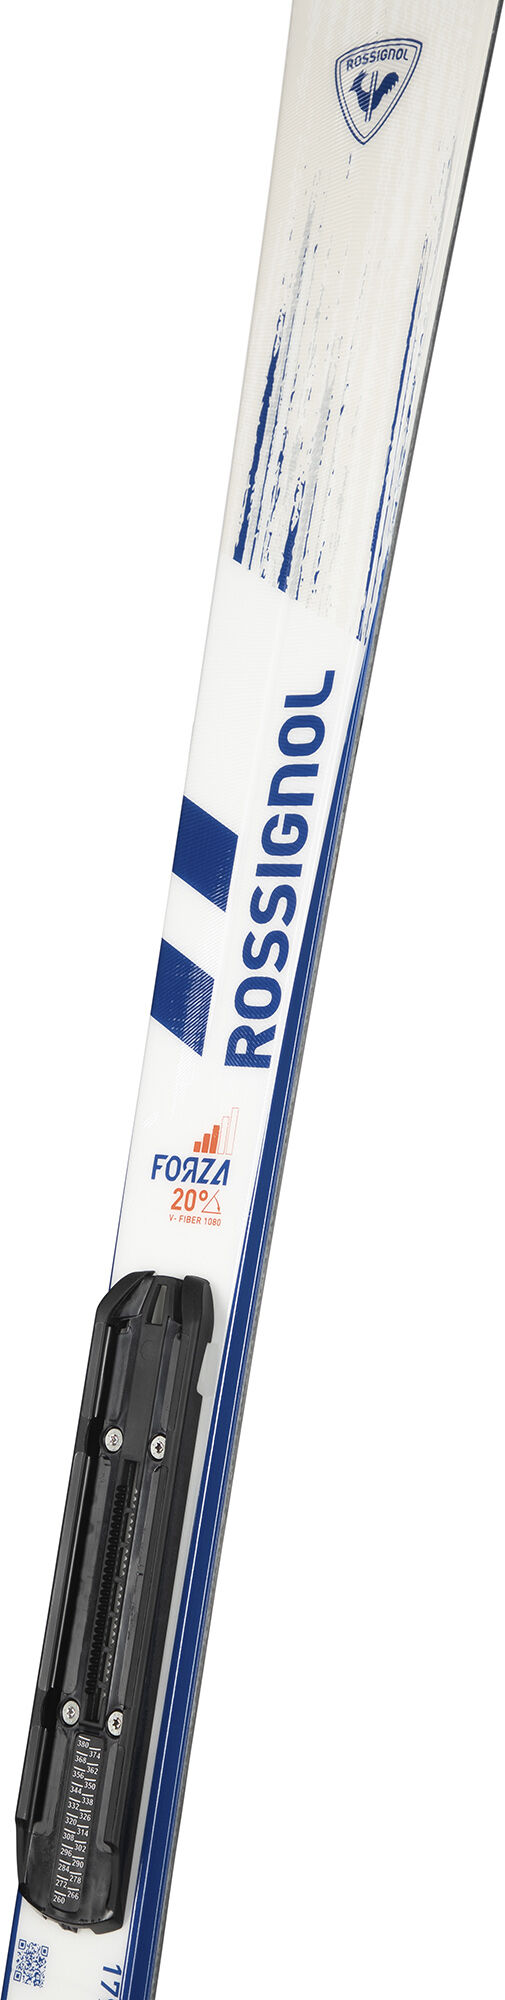 FORZA 20' V-FG 1080 XPRESS | ON PISTE | Rossignol